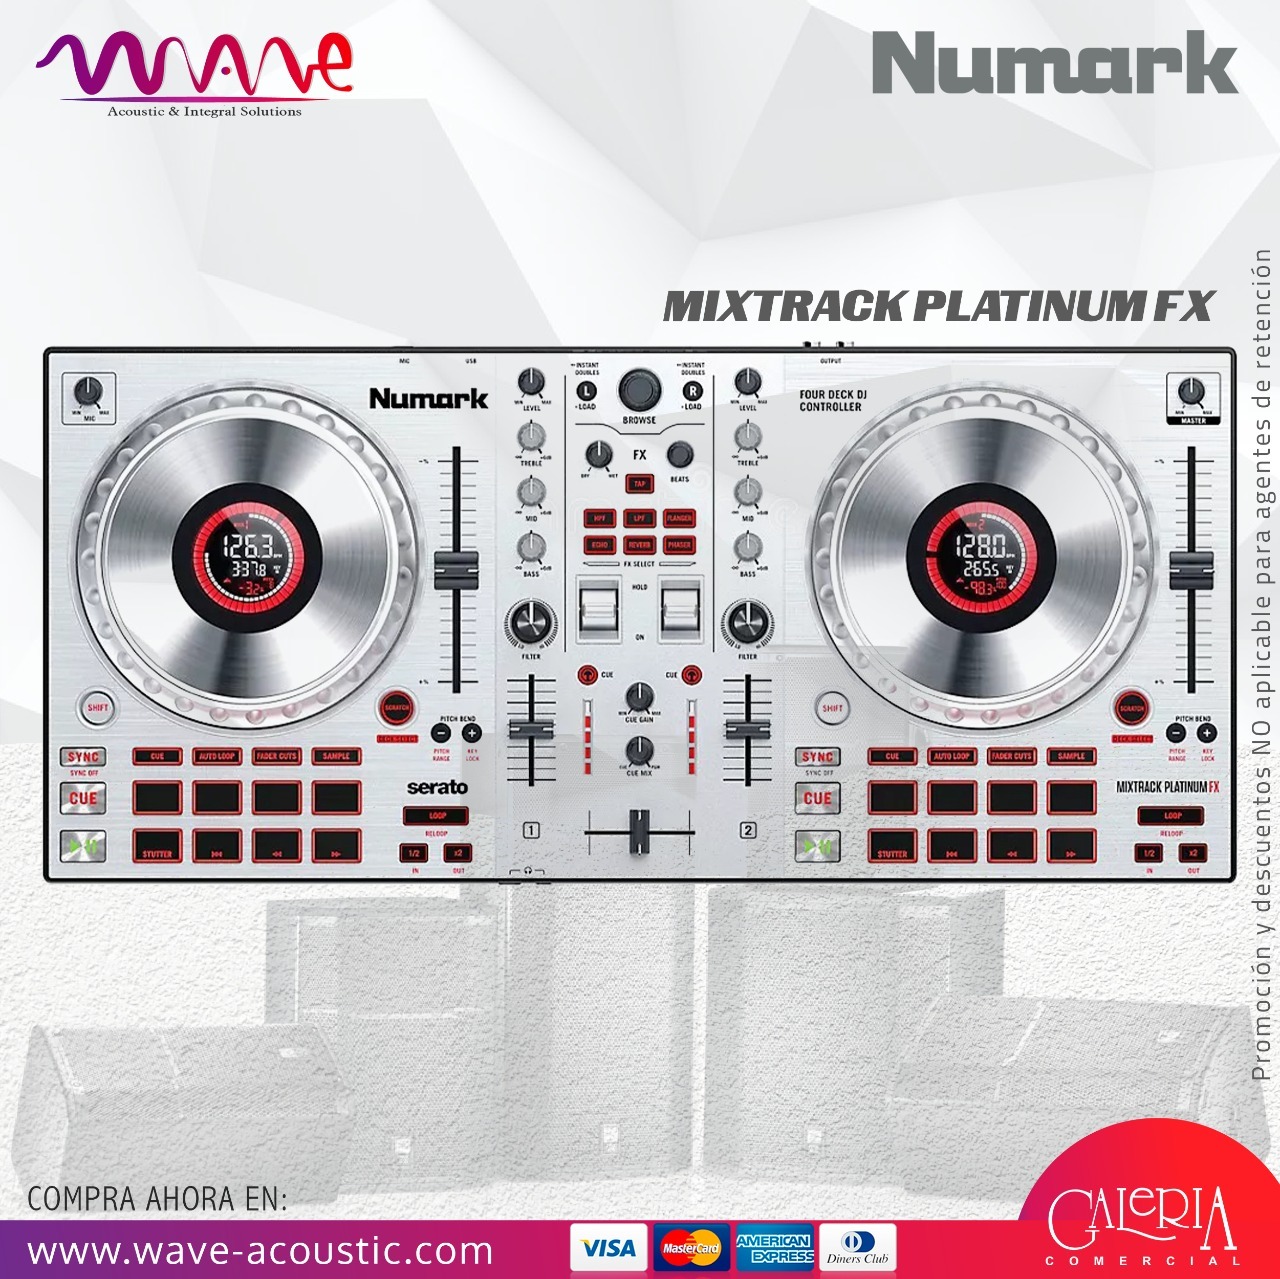 Numark Mixtrack Platinum FX  Controlador de DJ - Ditronics Ecuador